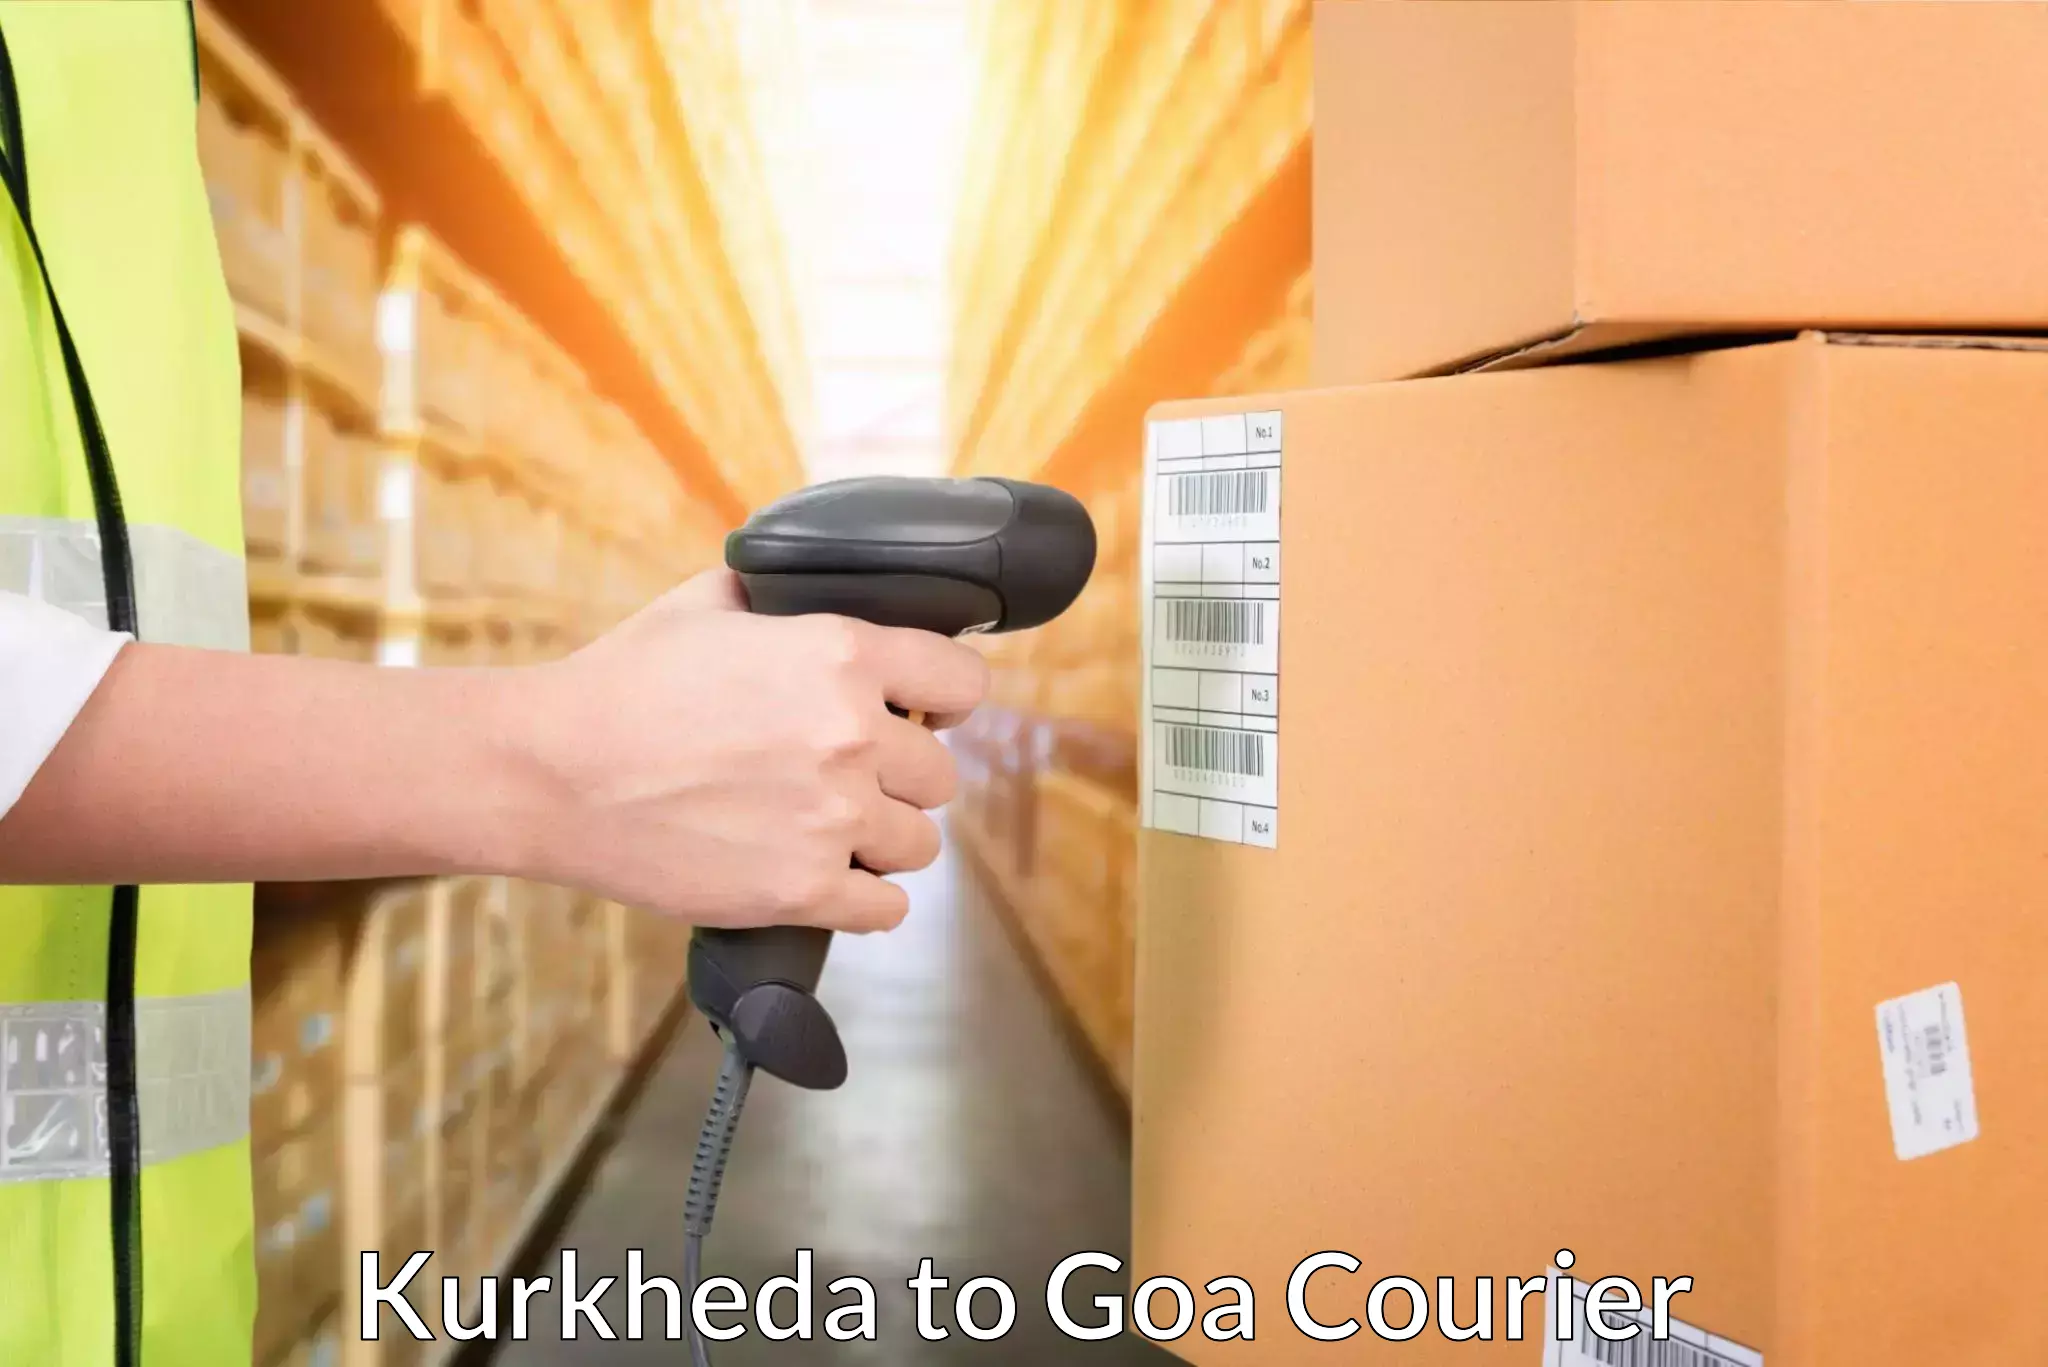 User-friendly courier app Kurkheda to Goa